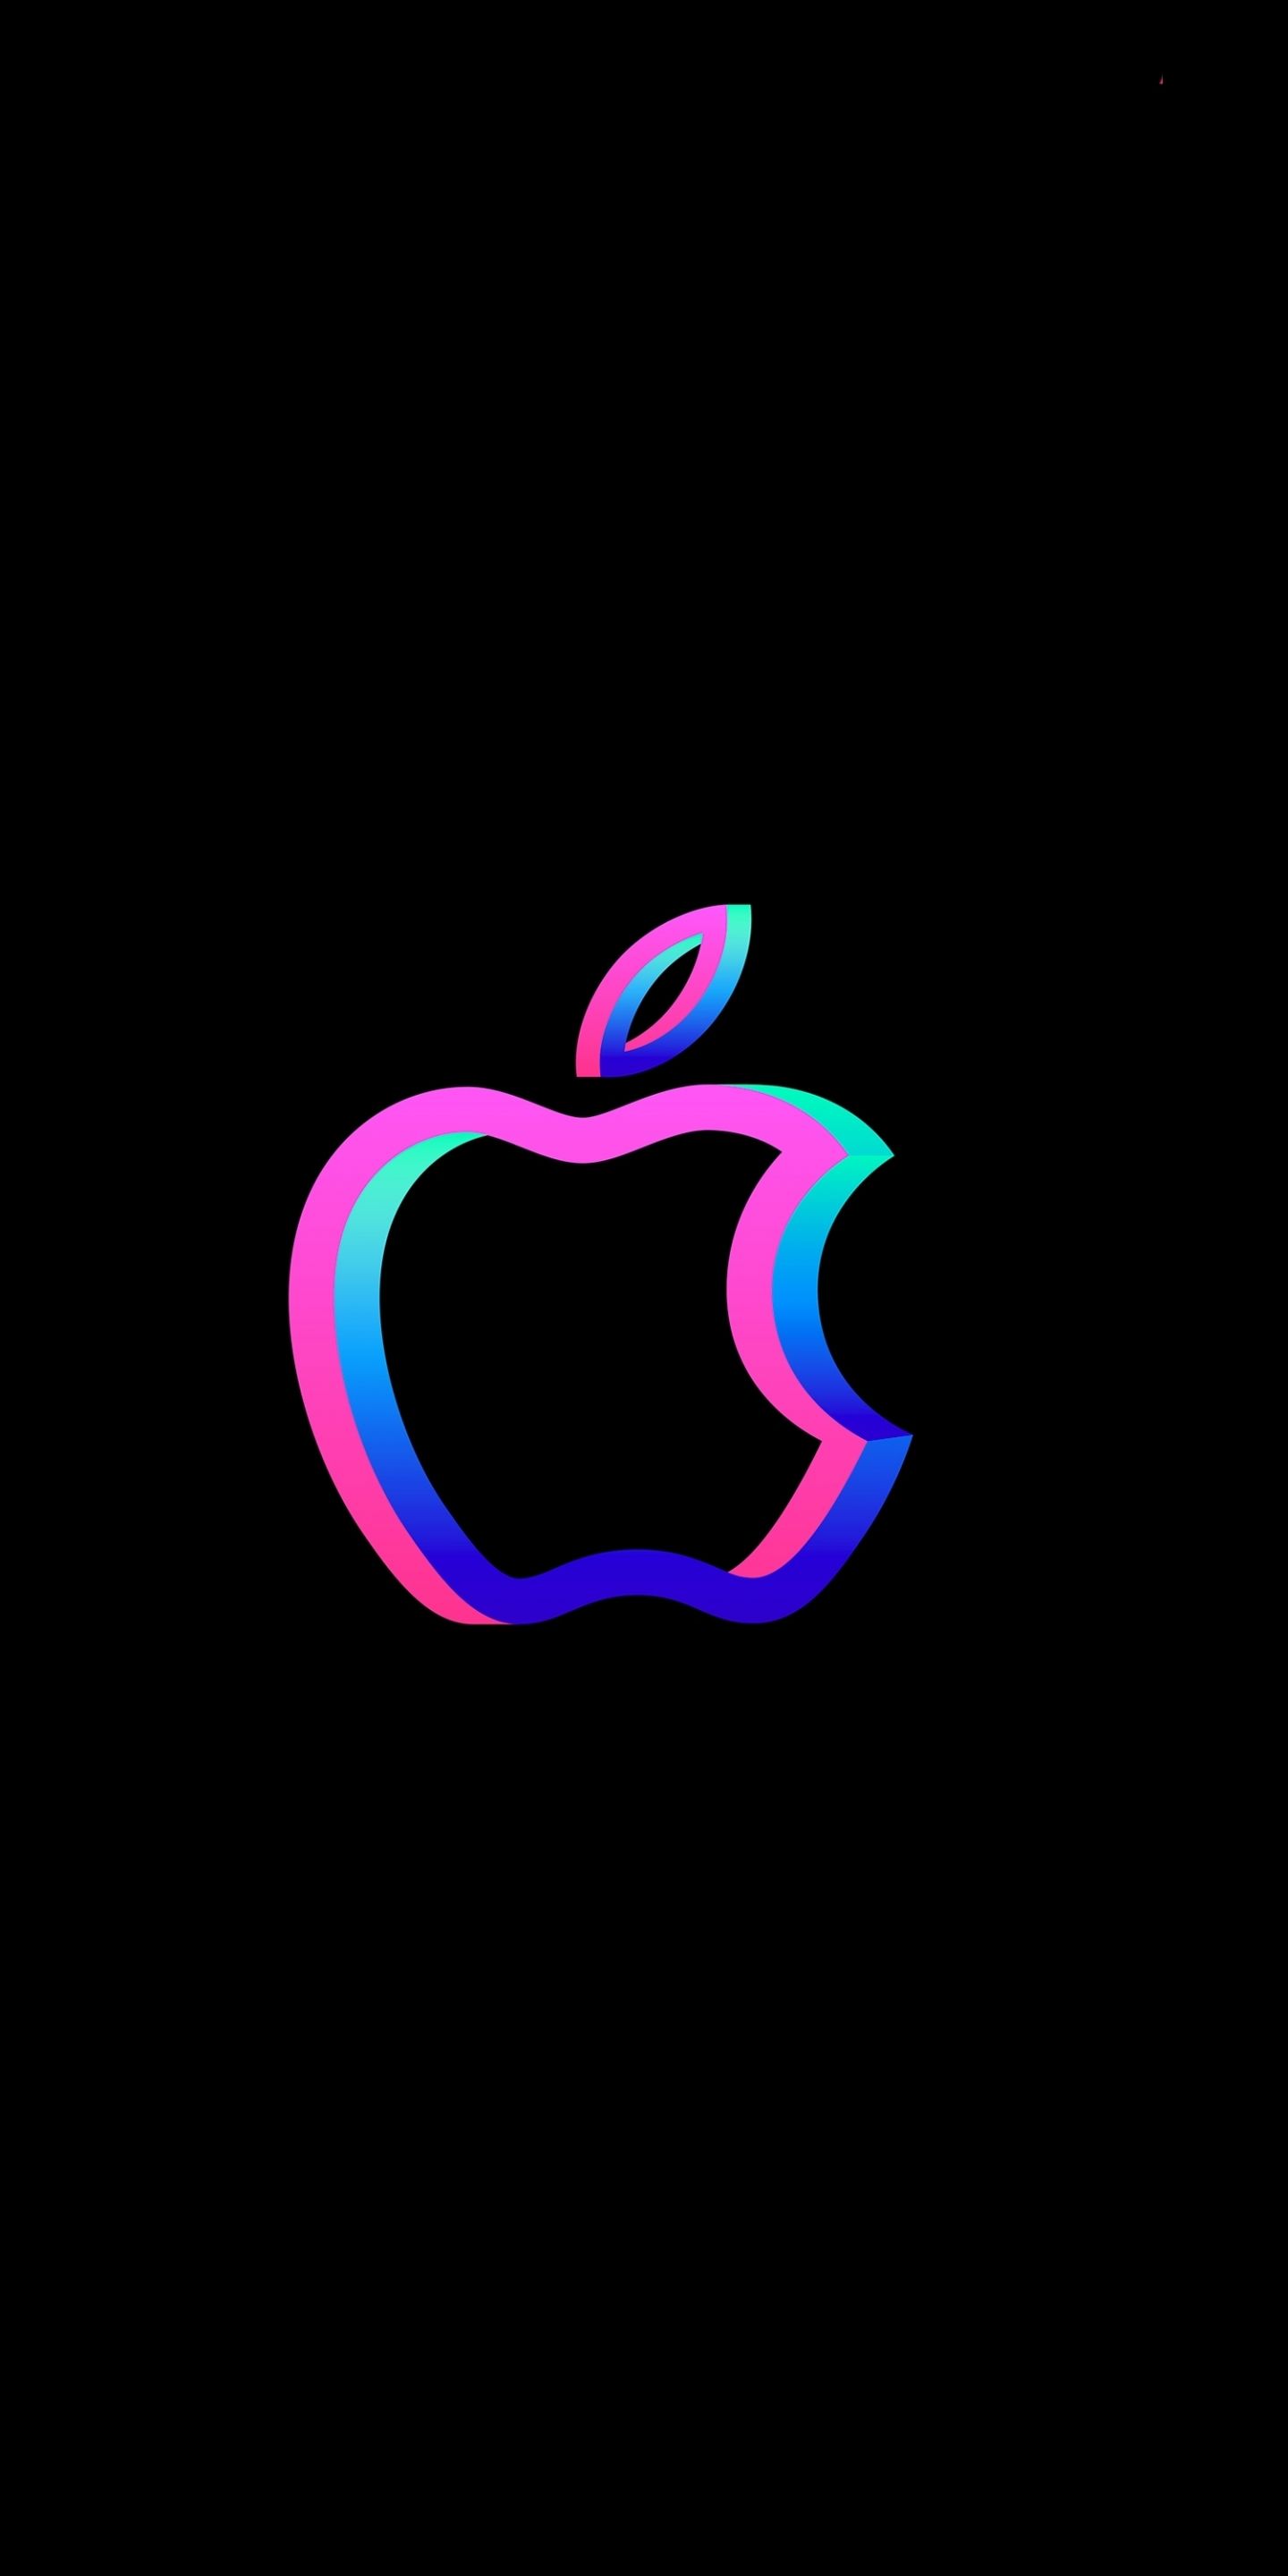 Apple logo, amoled wallpaper. Apple logo wallpaper iphone, Apple logo wallpaper, Apple wallpaper